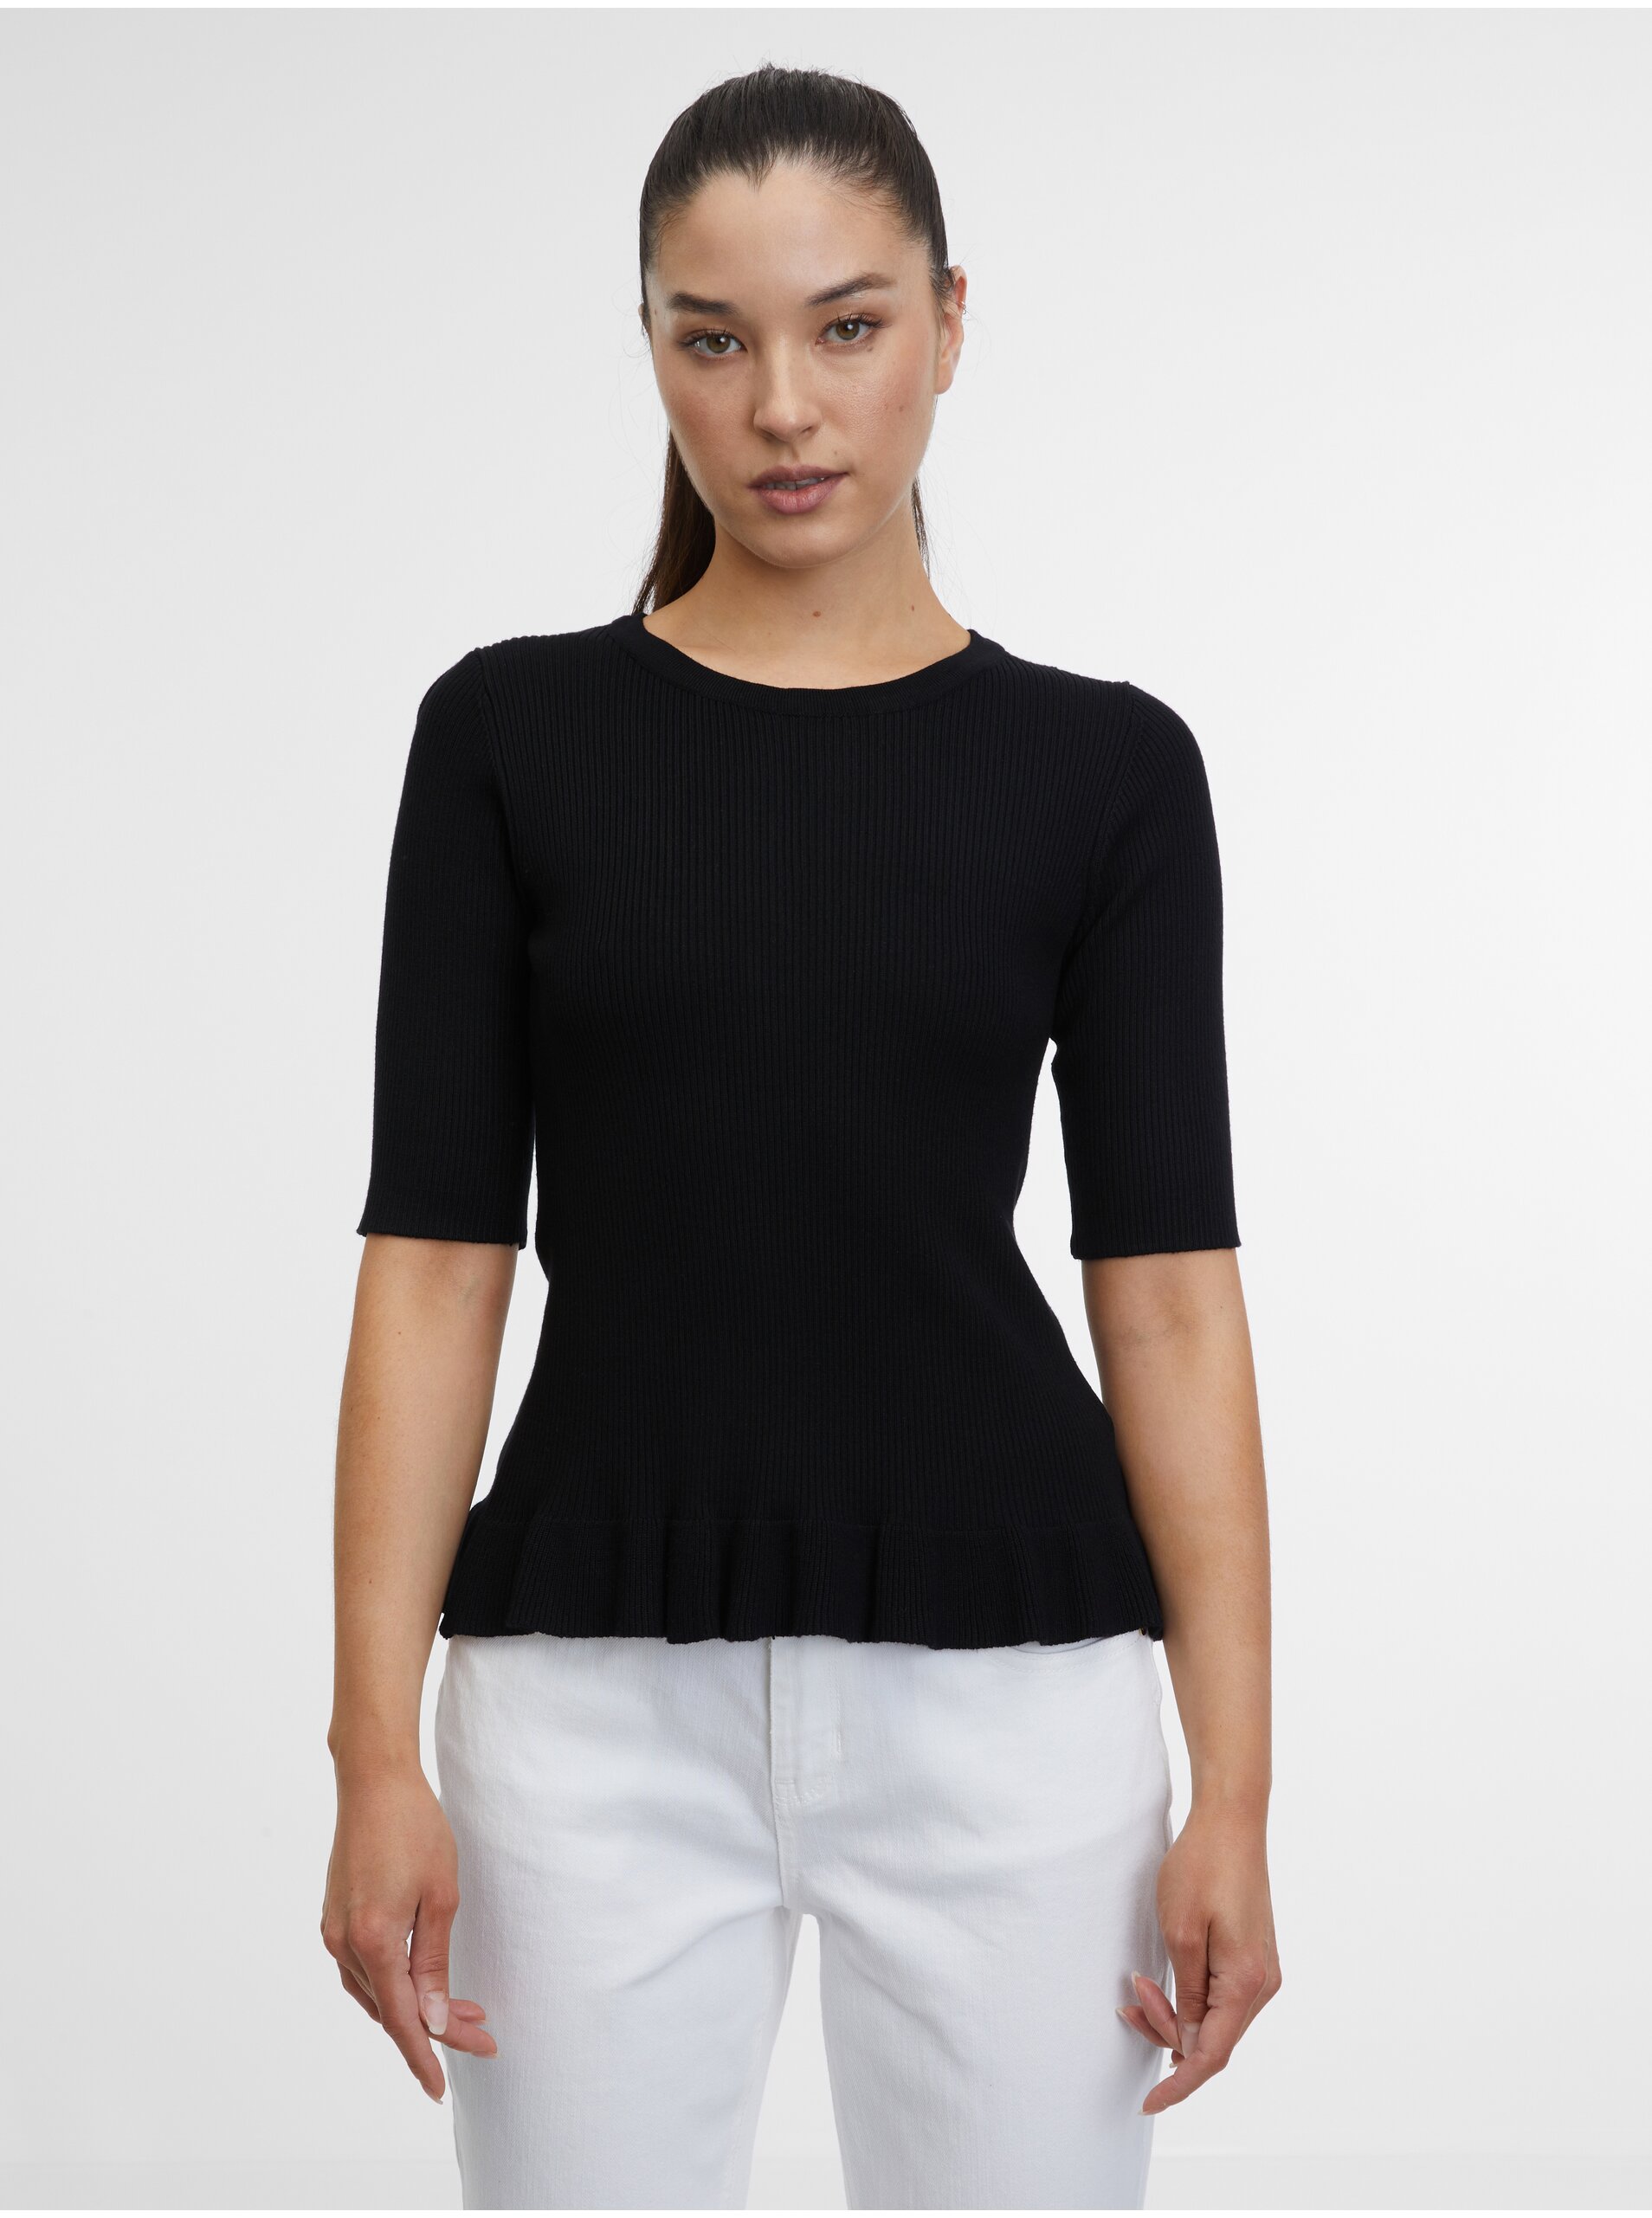 Lacno Čierne dámske úpletové tričko ORSAY